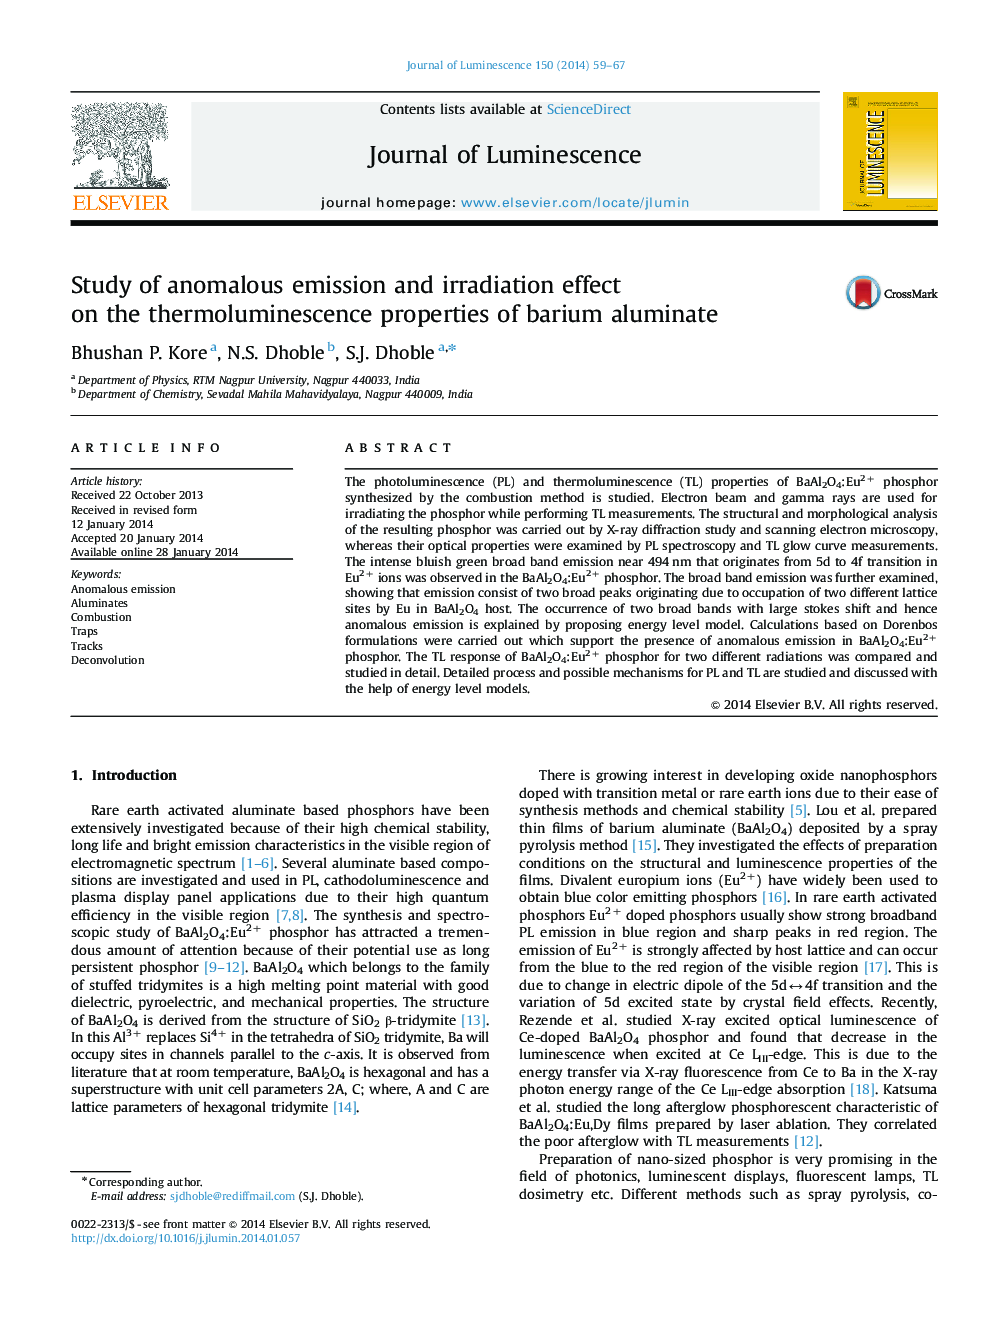 Study of anomalous emission and irradiation effect on the thermoluminescence properties of barium aluminate